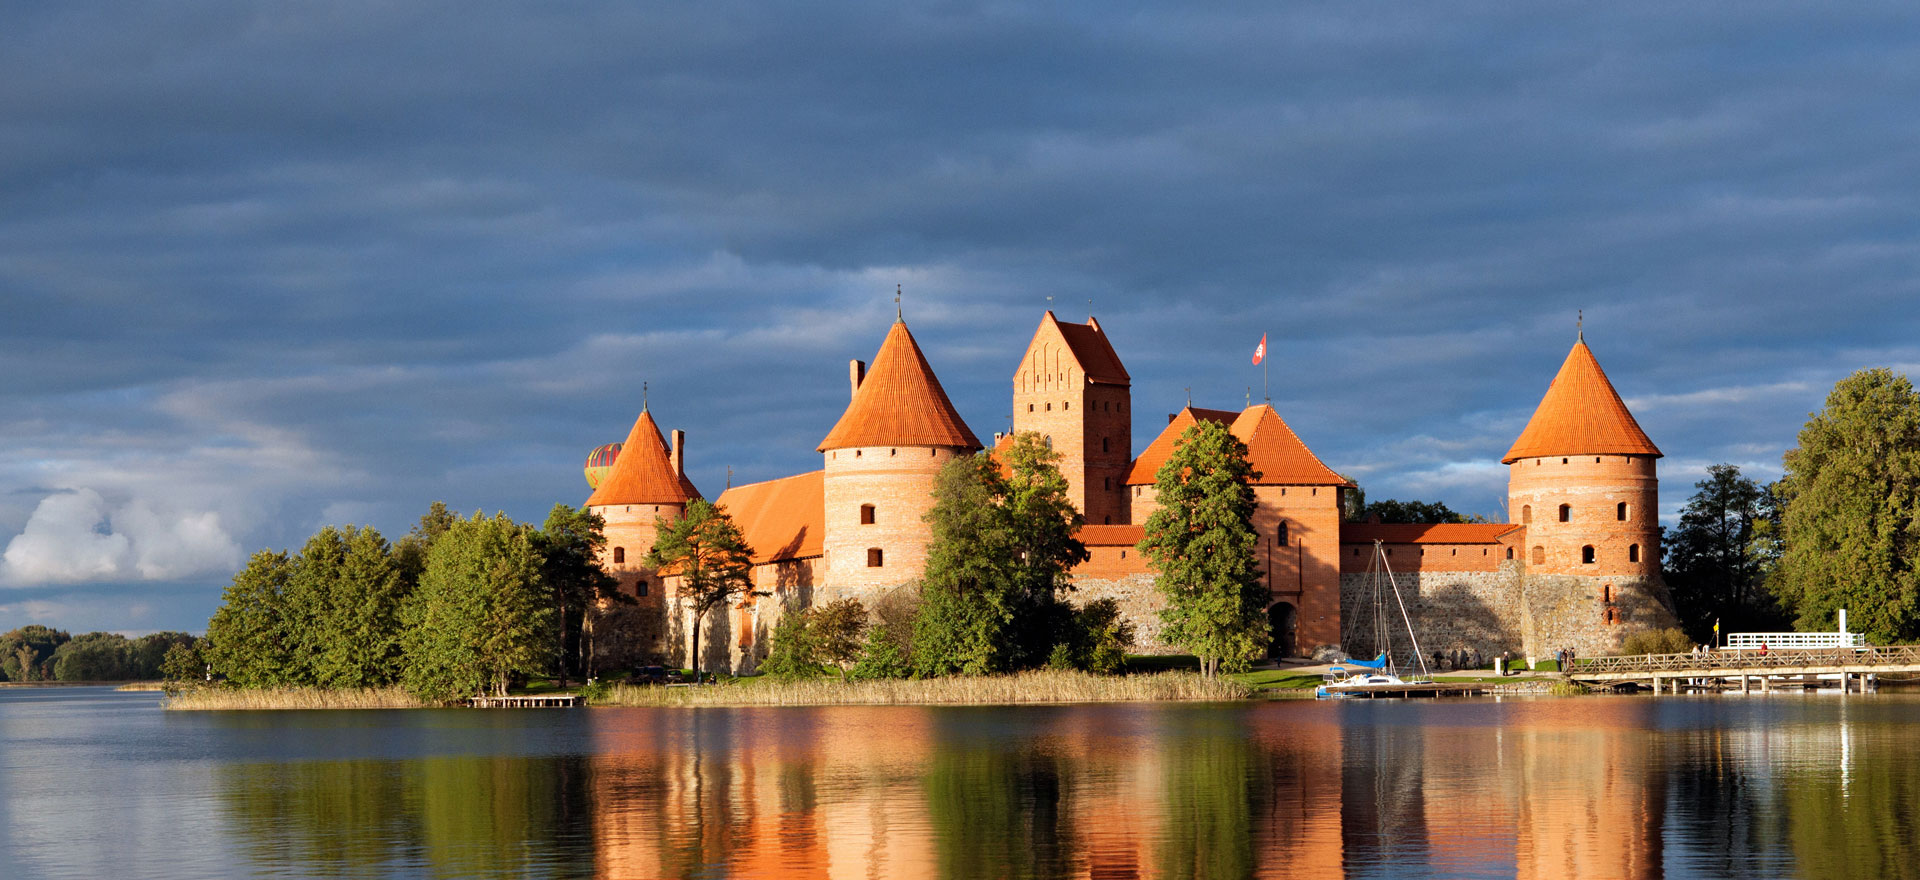 Trakai Castle - Lithuania holidays and Tours